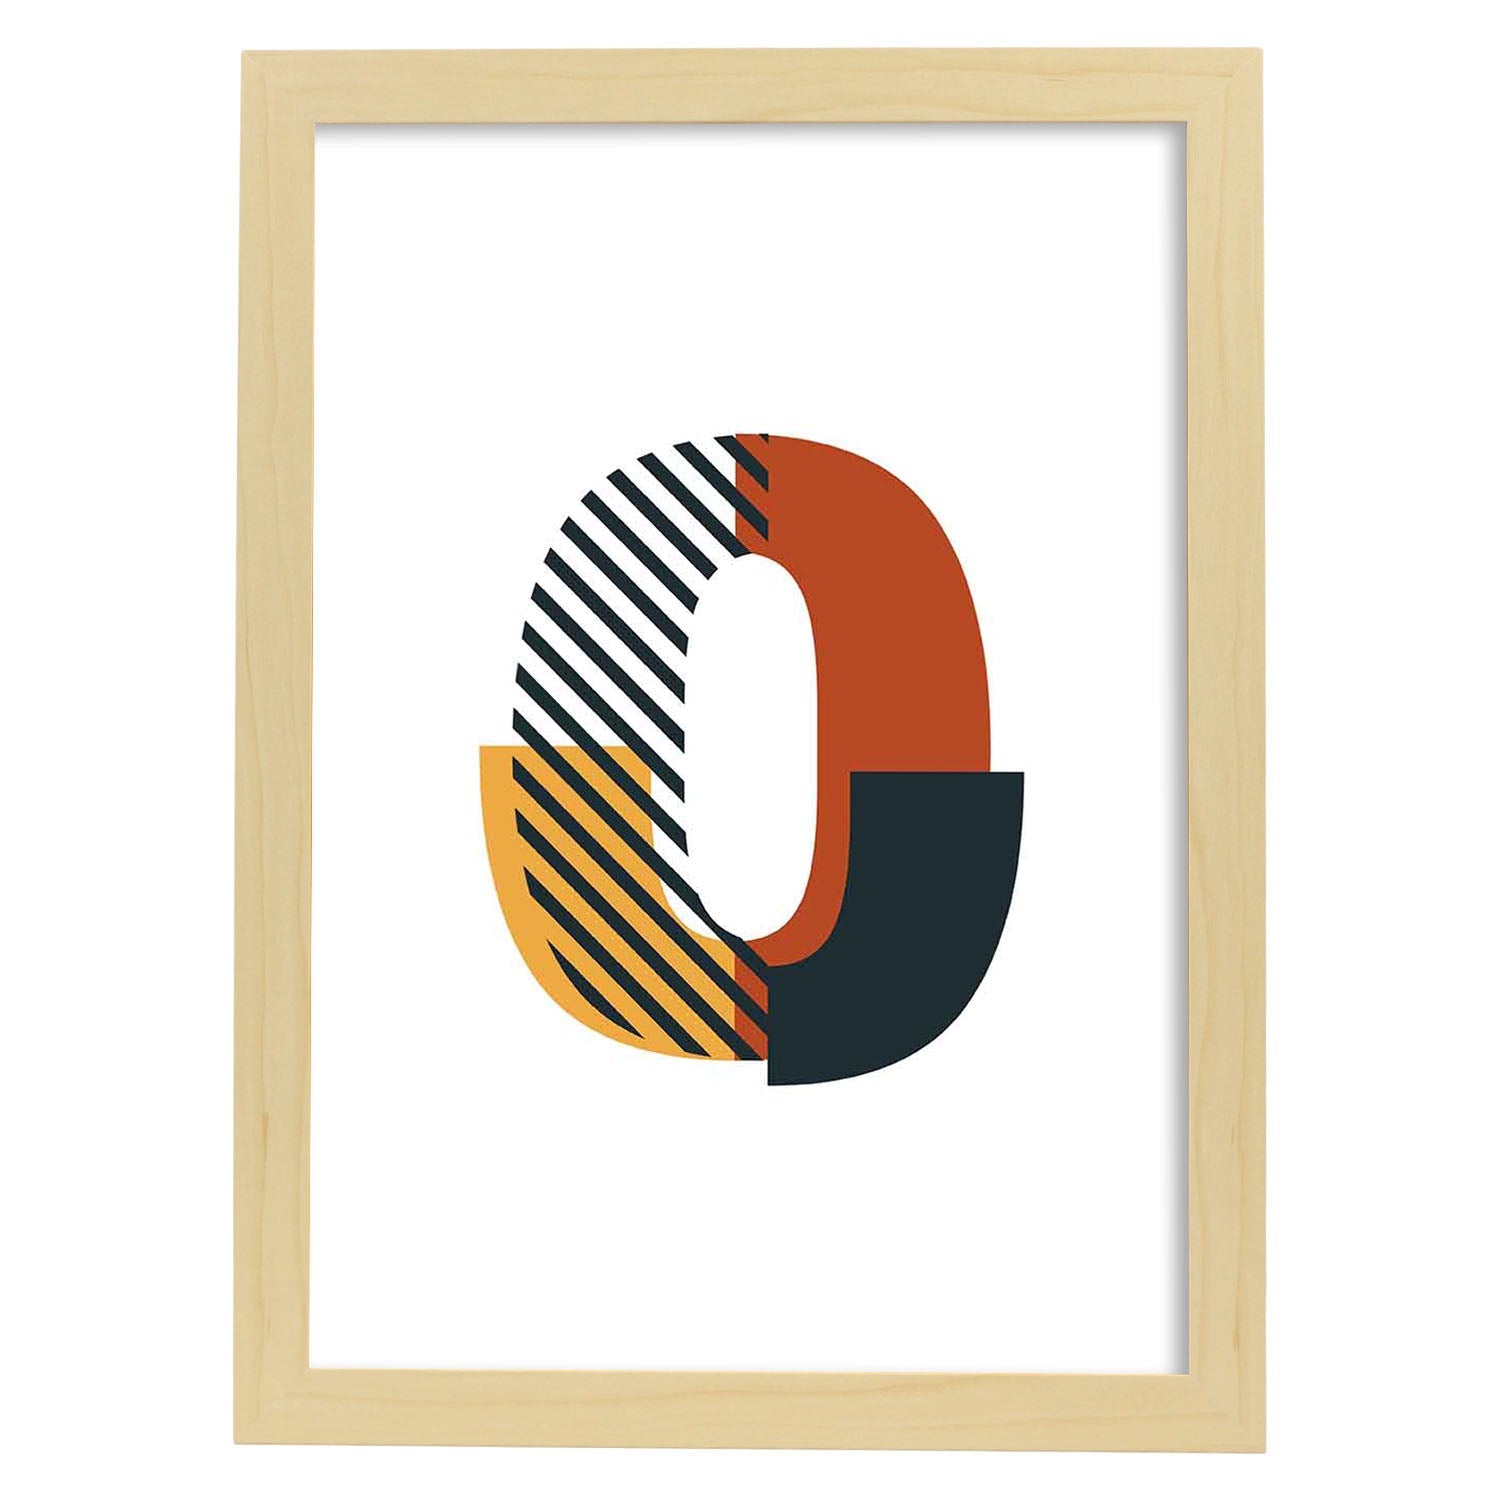 Poster de número 0. Lámina estilo Geometria con imágenes del alfabeto.-Artwork-Nacnic-A4-Marco Madera clara-Nacnic Estudio SL